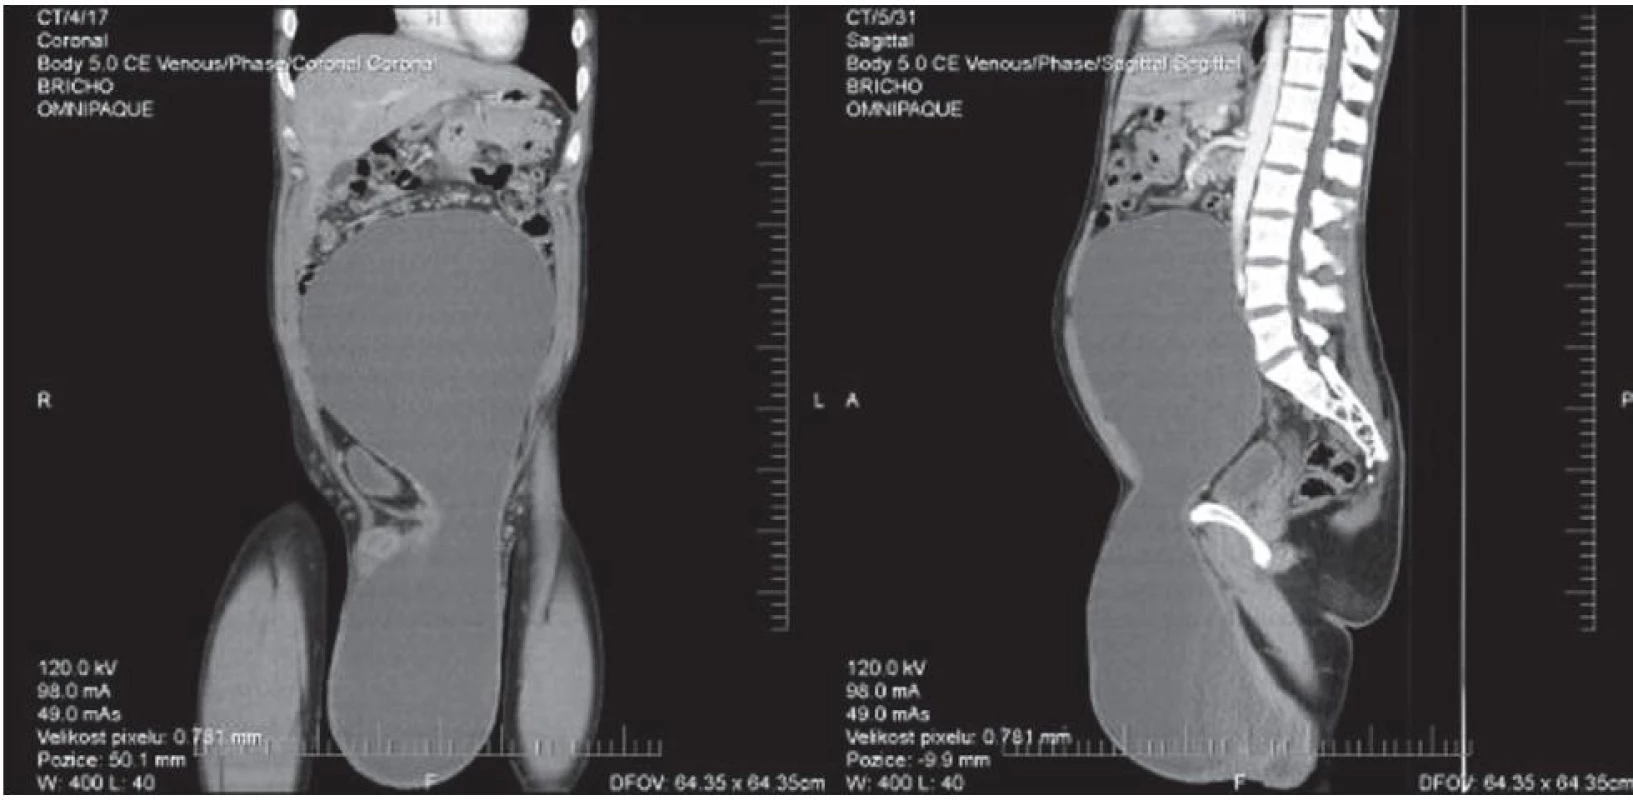 CT snímky před operací
Obr. 2. CT images before the operation